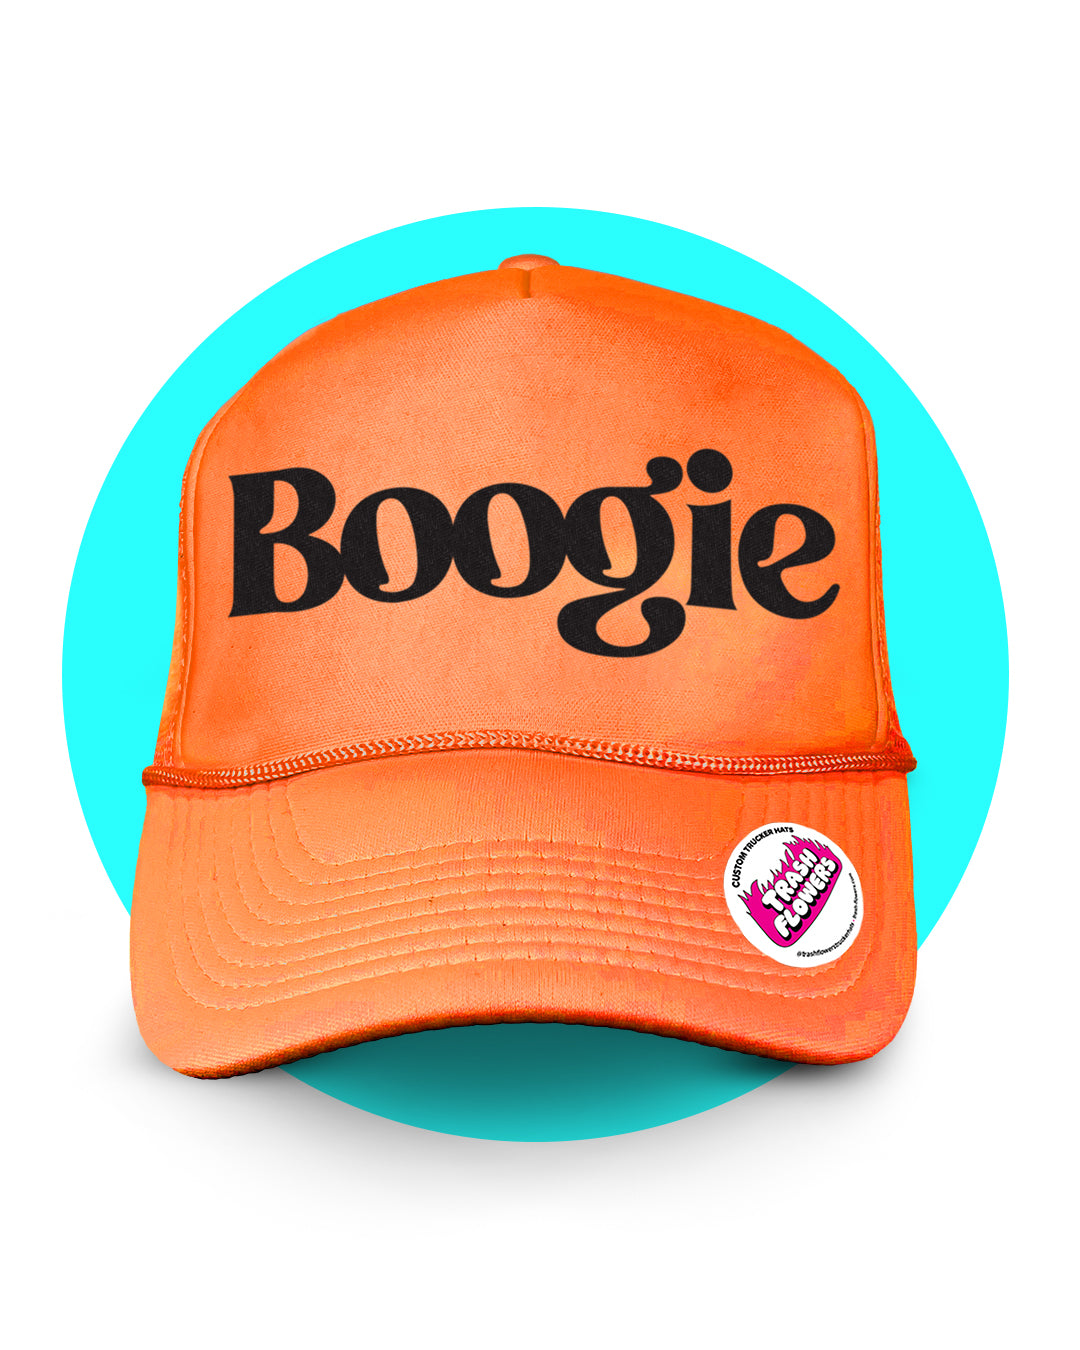 Boogie Trucker Hat